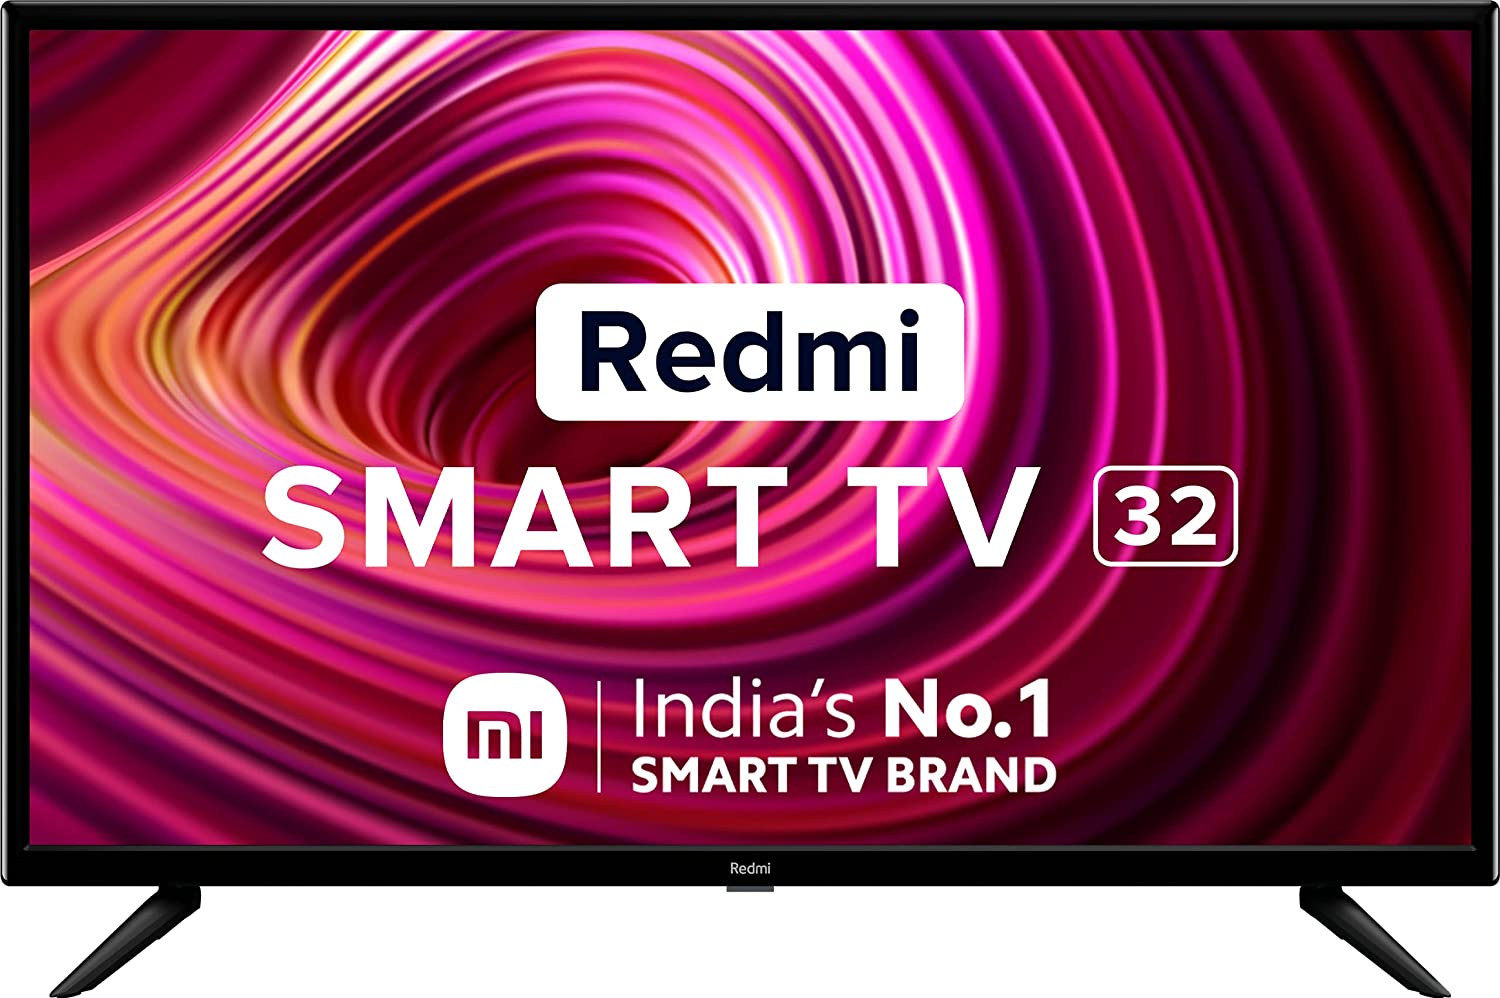 Redmi 80 cm HD ready smart LED TV